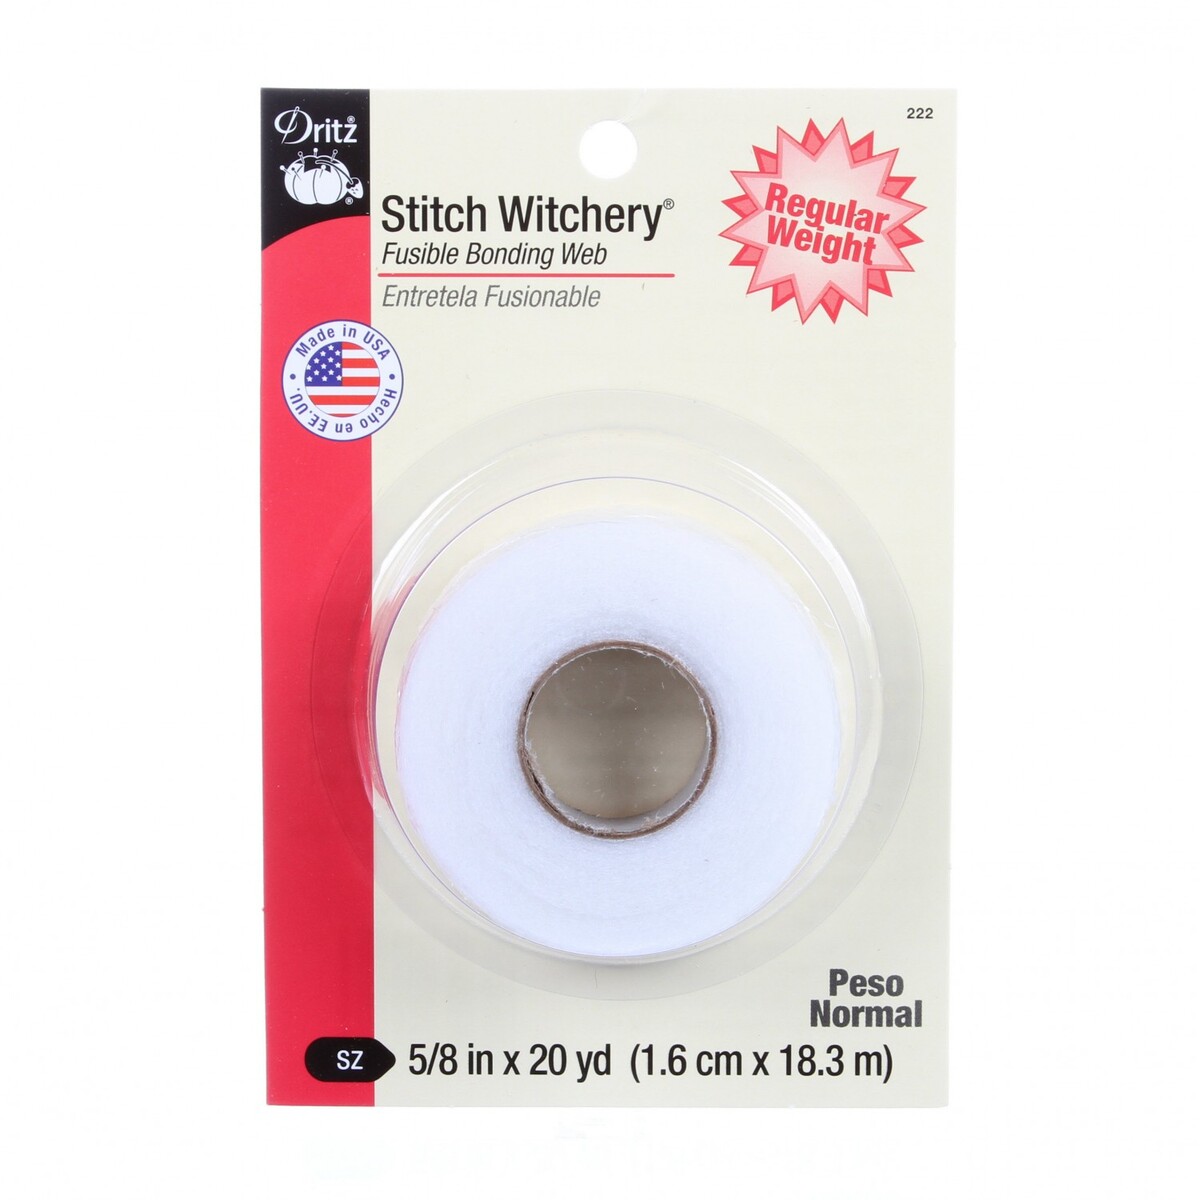 Dritz 5/8 Stitch Witchery Fusible Bonding Web, Regular Weight -  Ireland